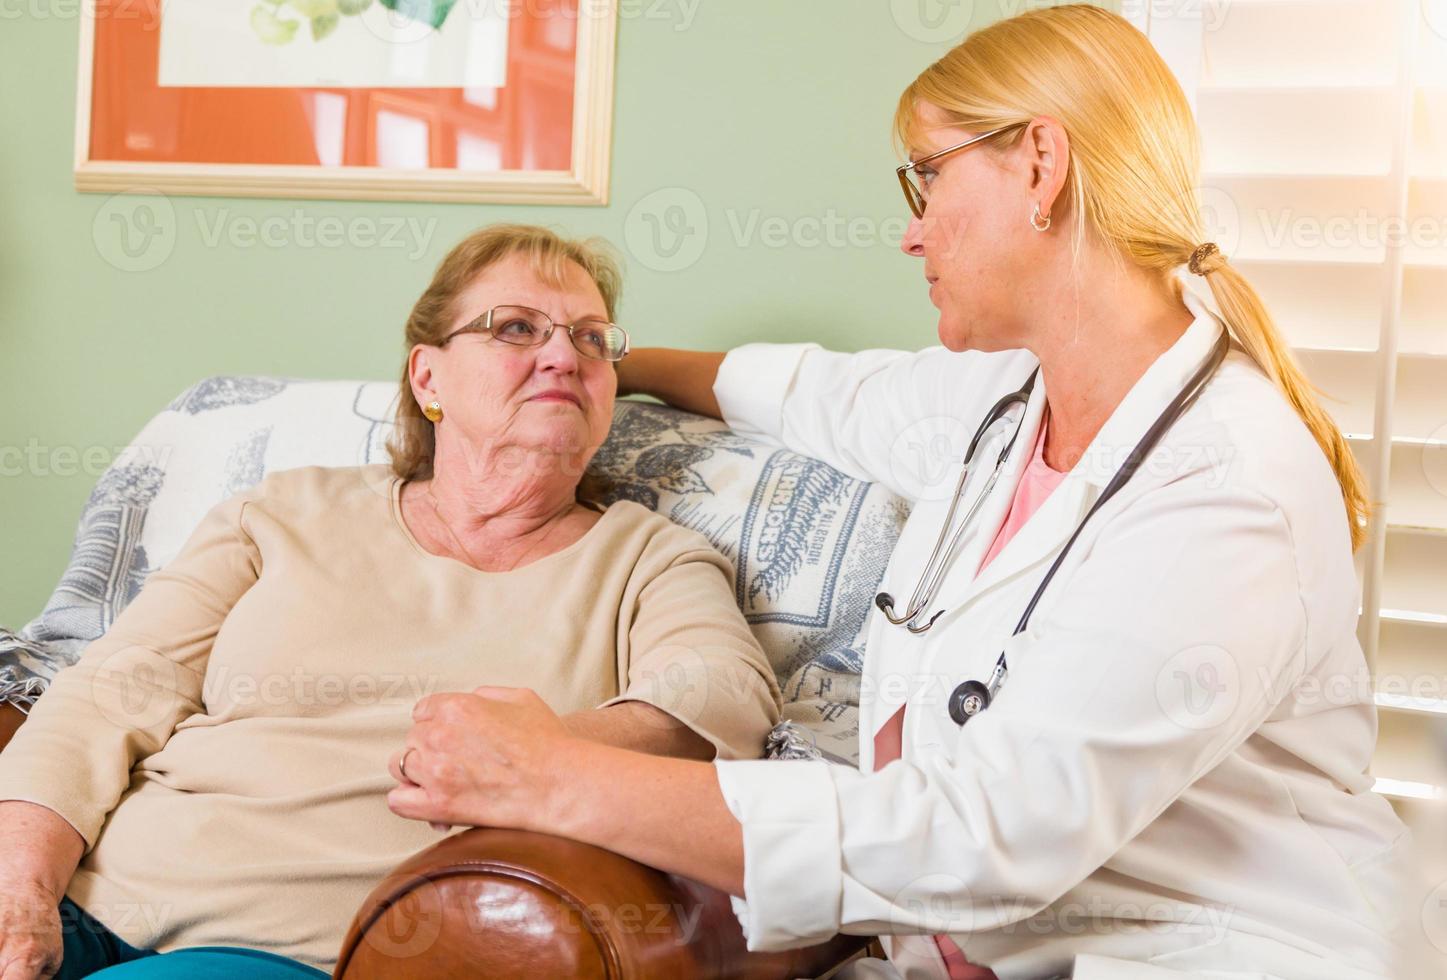 contento sorridente medico o infermiera parlando per anziano donna nel sedia a casa foto